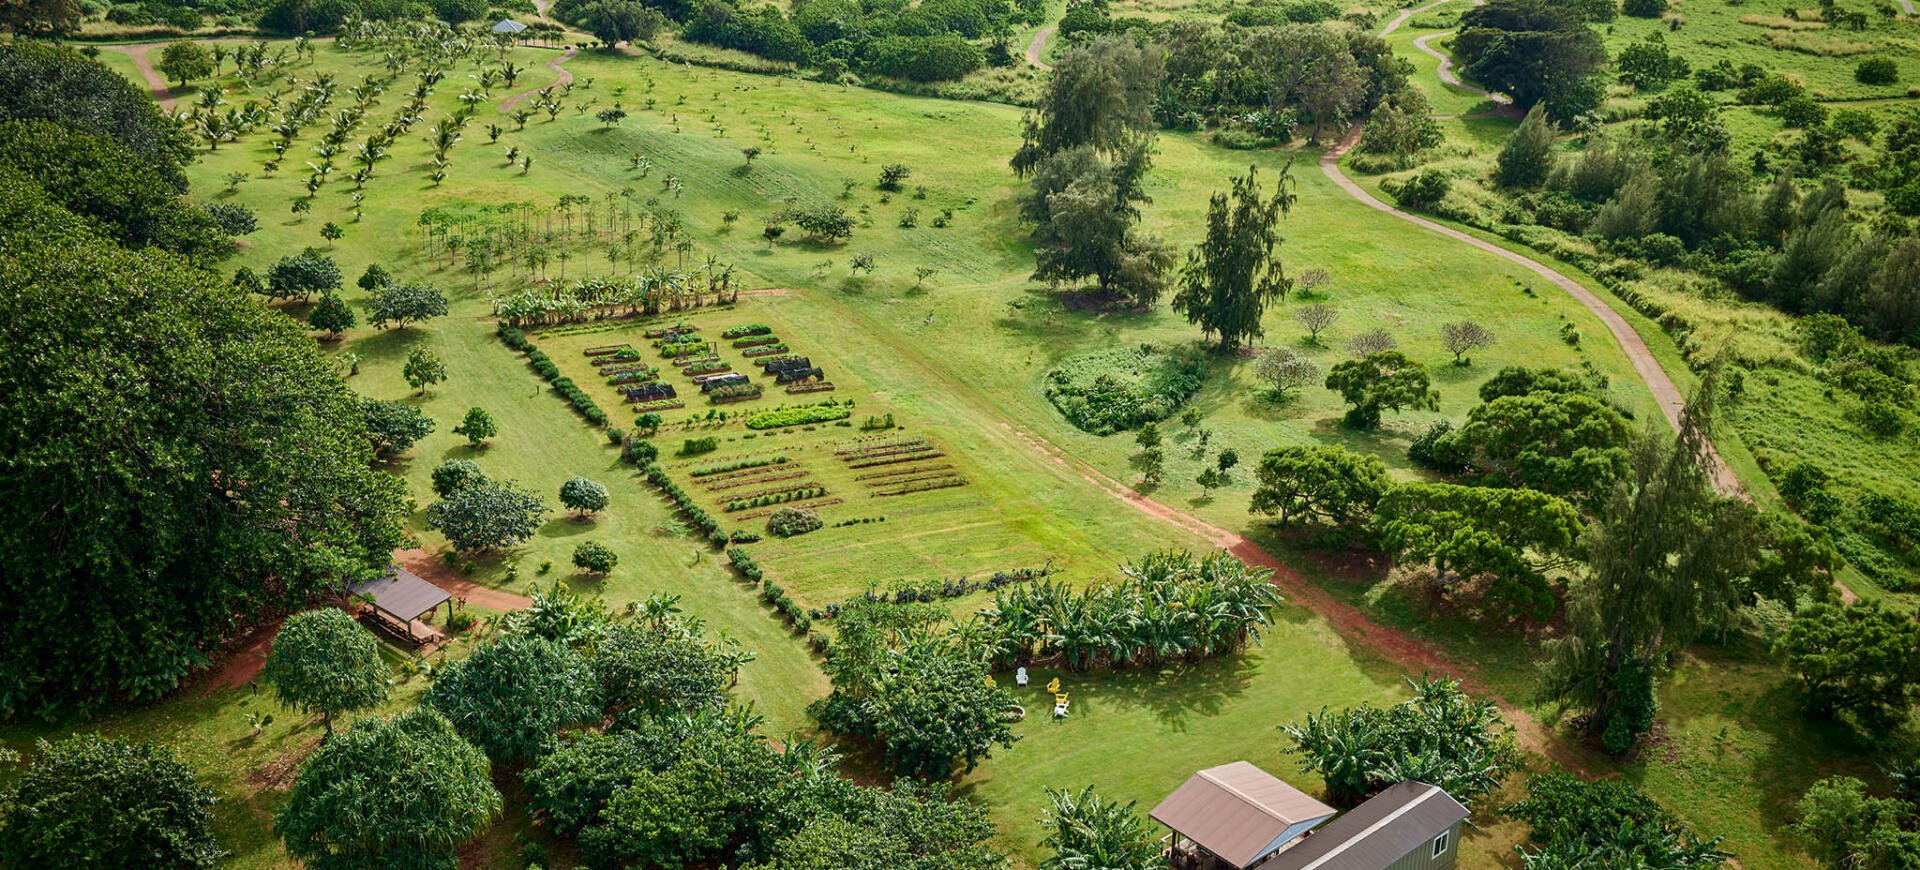 Aerial view of The Farm at Hokuala, an organic 16.5 acre farm within the Hokuala resort on Kauai